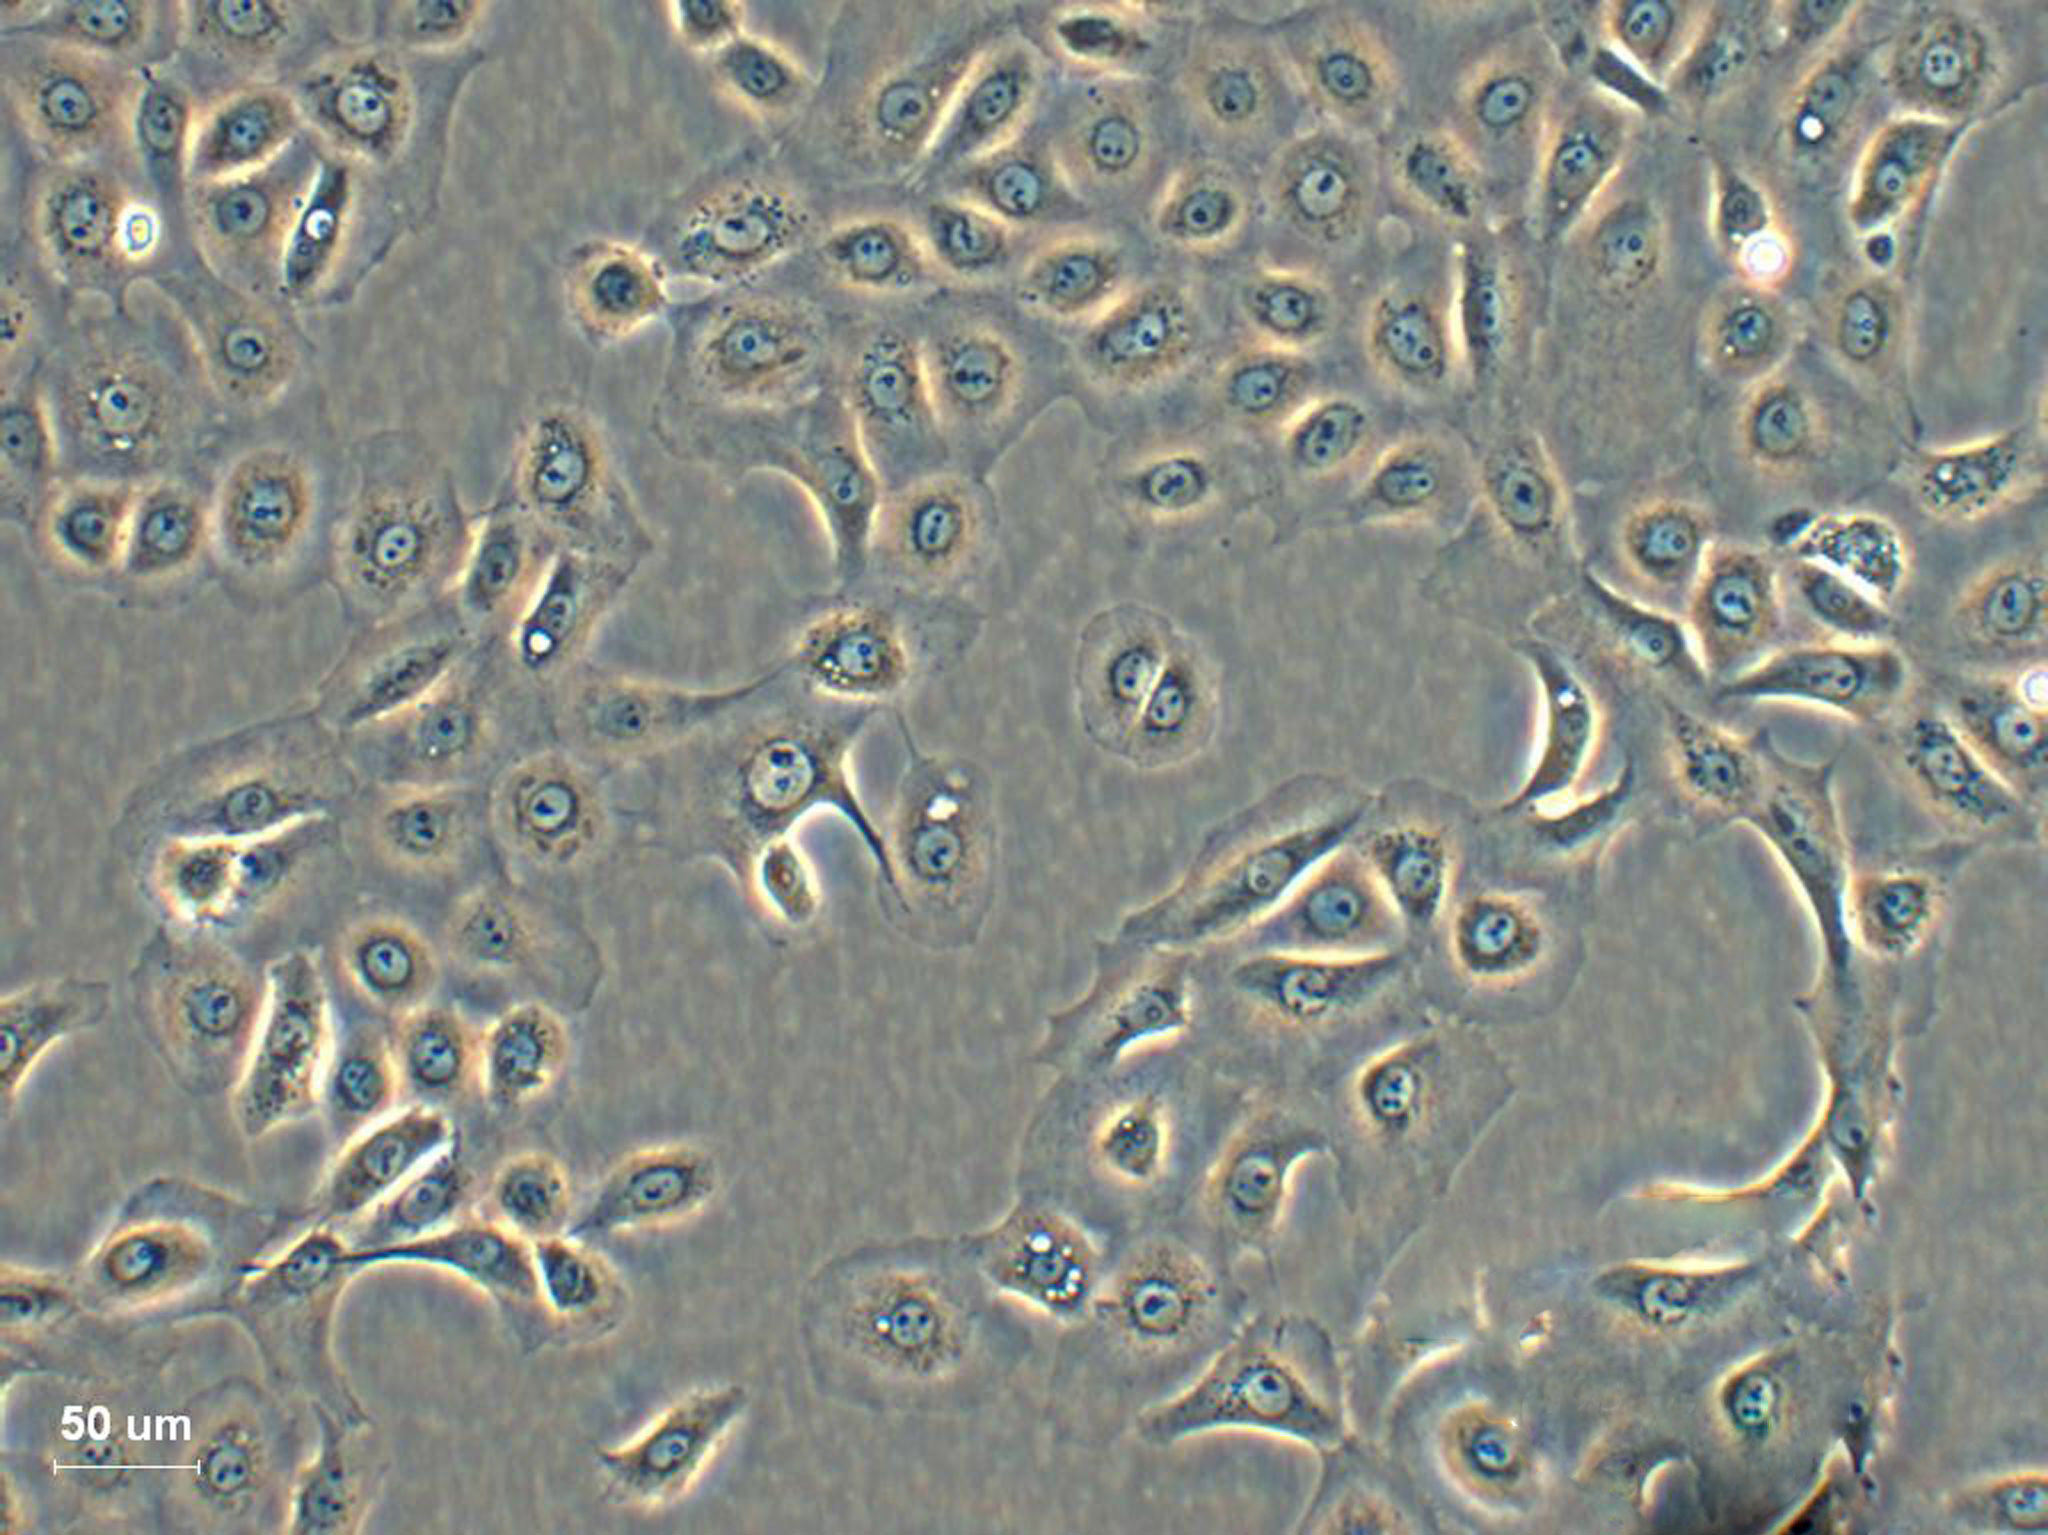 FM88 epithelioid cells人黑色素瘤细胞系,FM88 epithelioid cells